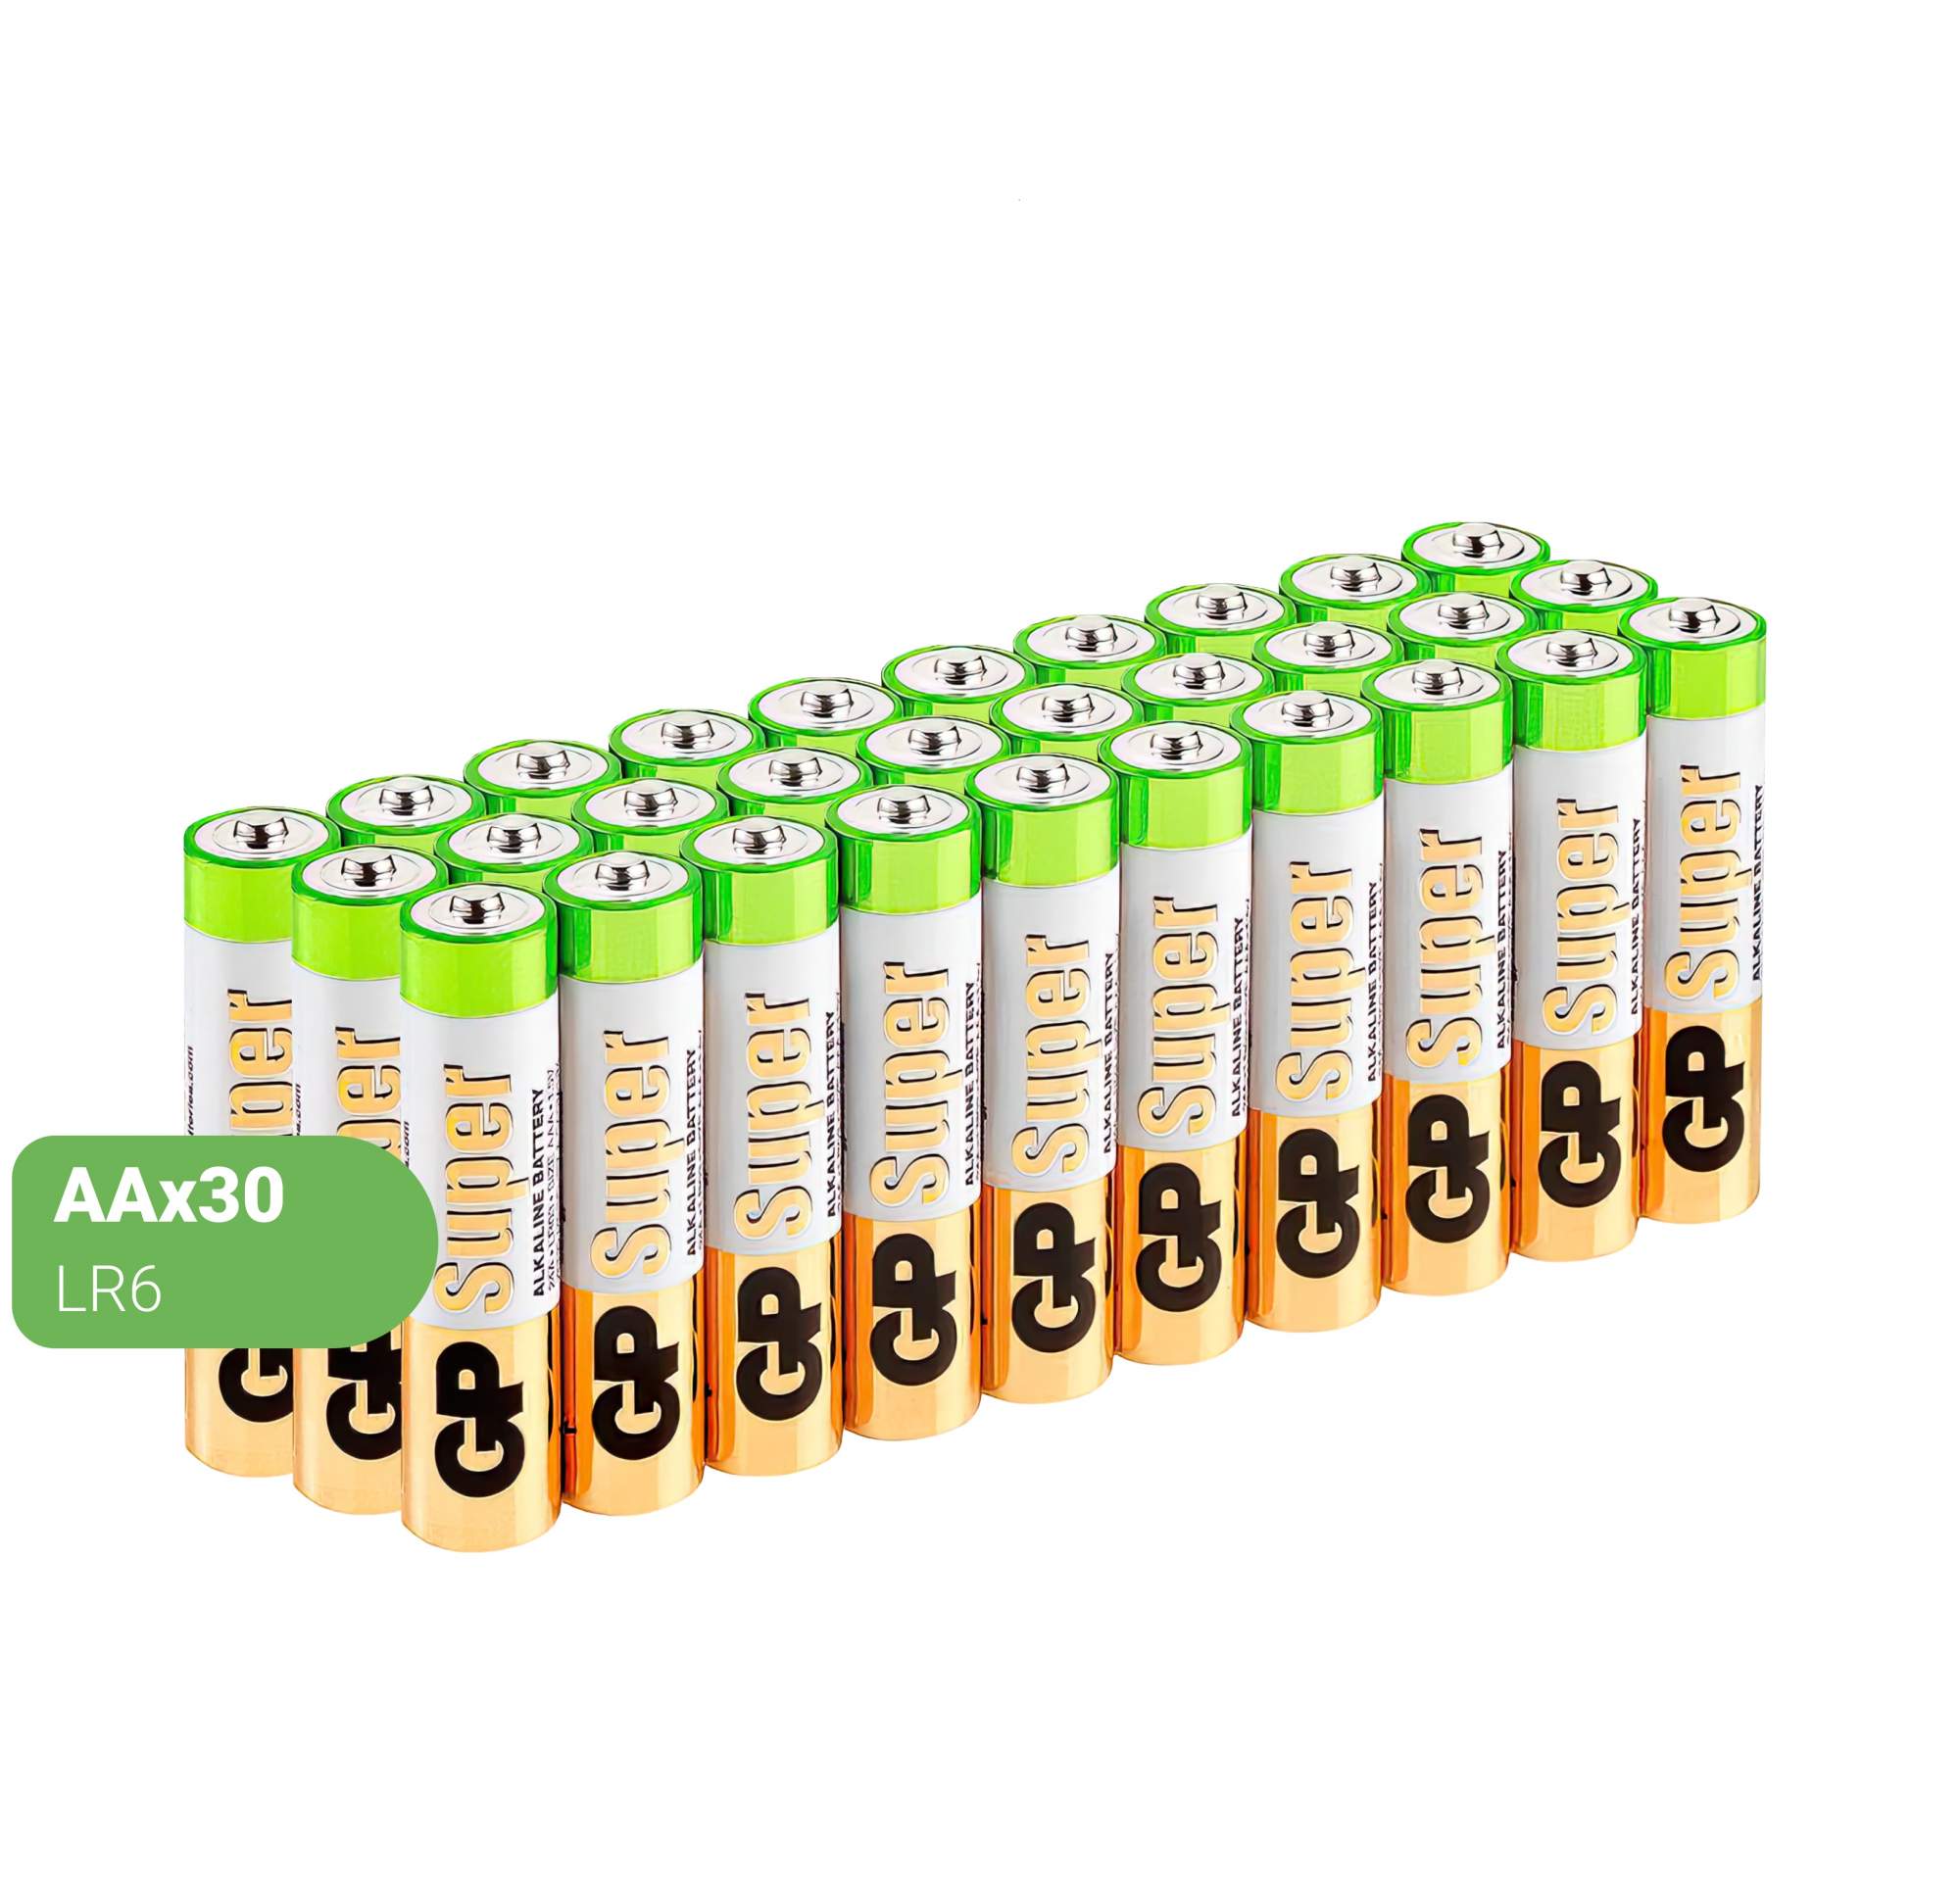 Батарейки GP Batteries Super алкалиновые, АА, 30 шт - купить в Мегамаркет Москва, цена на Мегамаркет